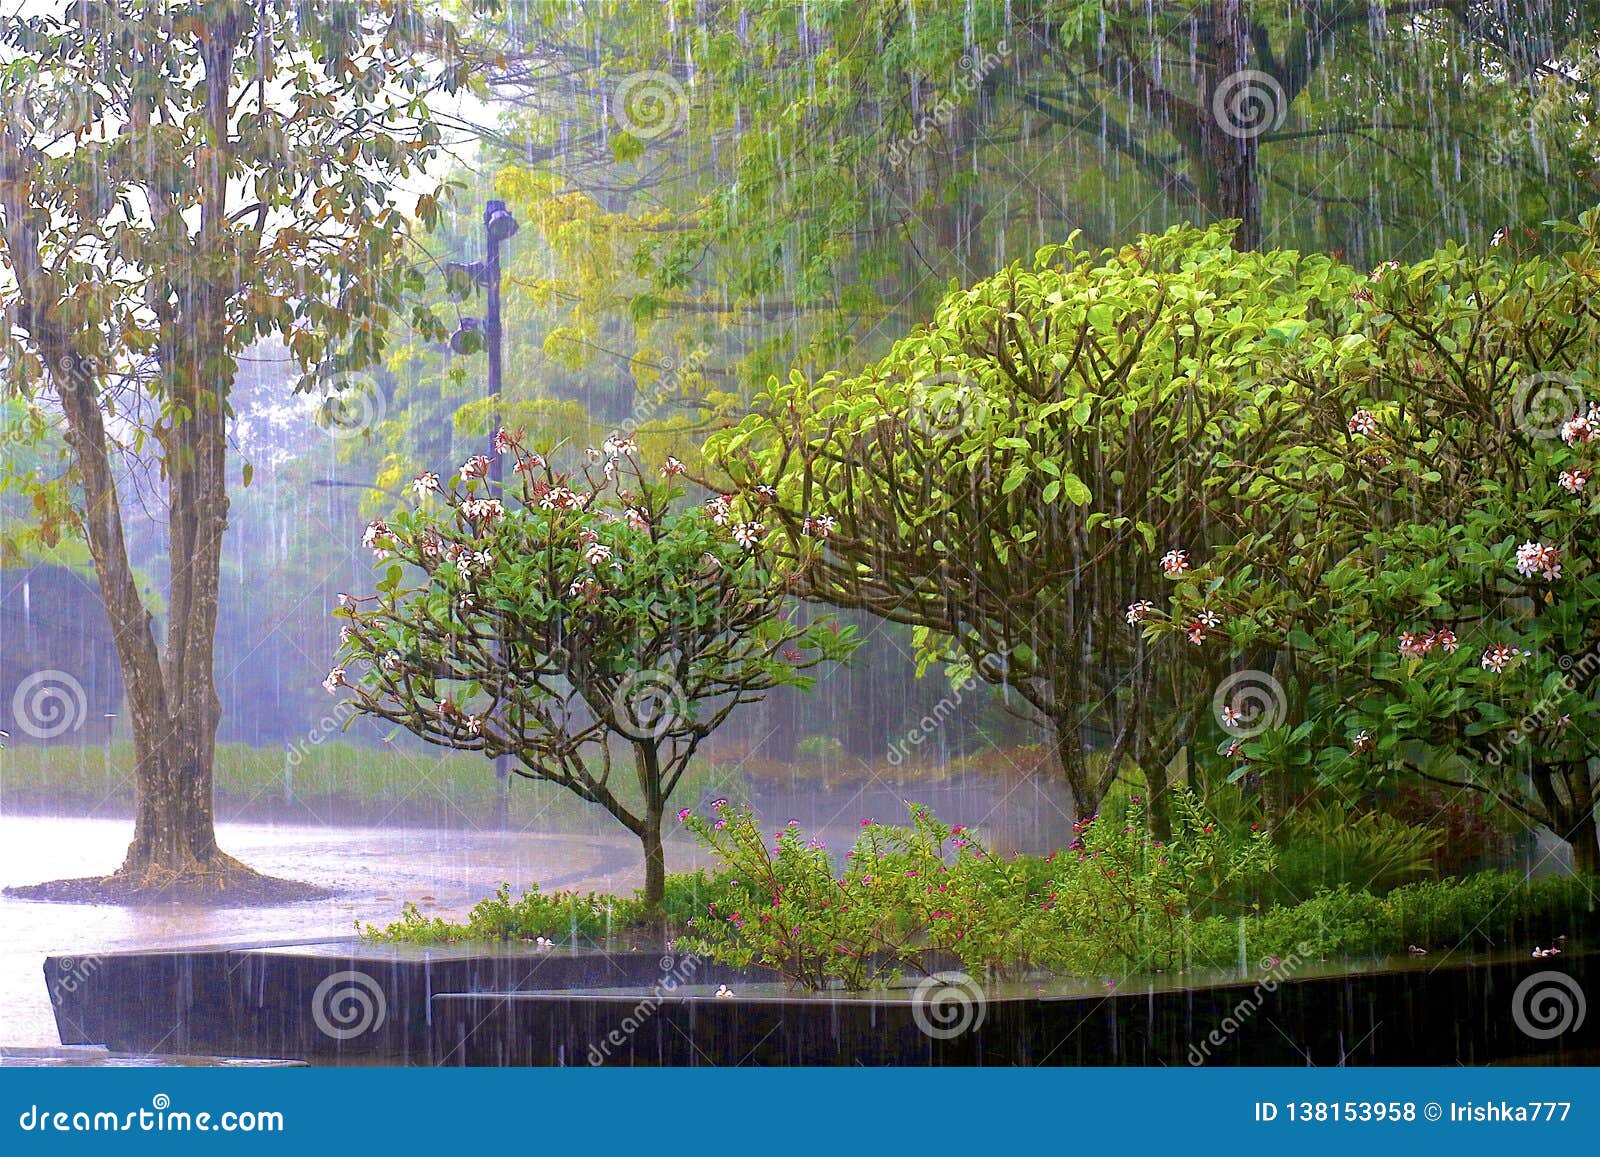 Rain garden plants singapore